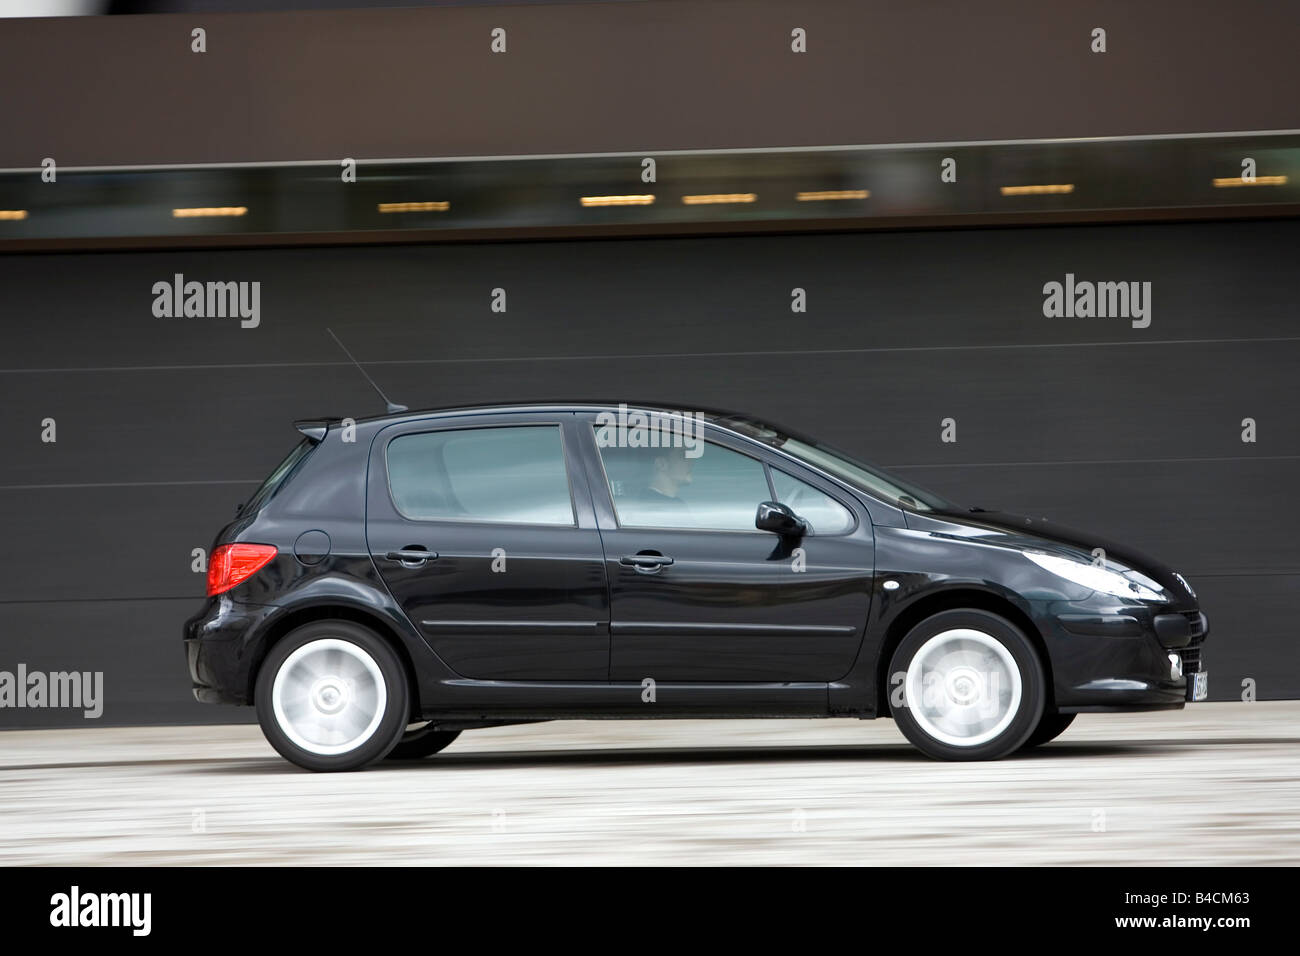 Peugeot 307 HDI FAP 135, black, model year 2005-, driving, side view, City  Stock Photo - Alamy